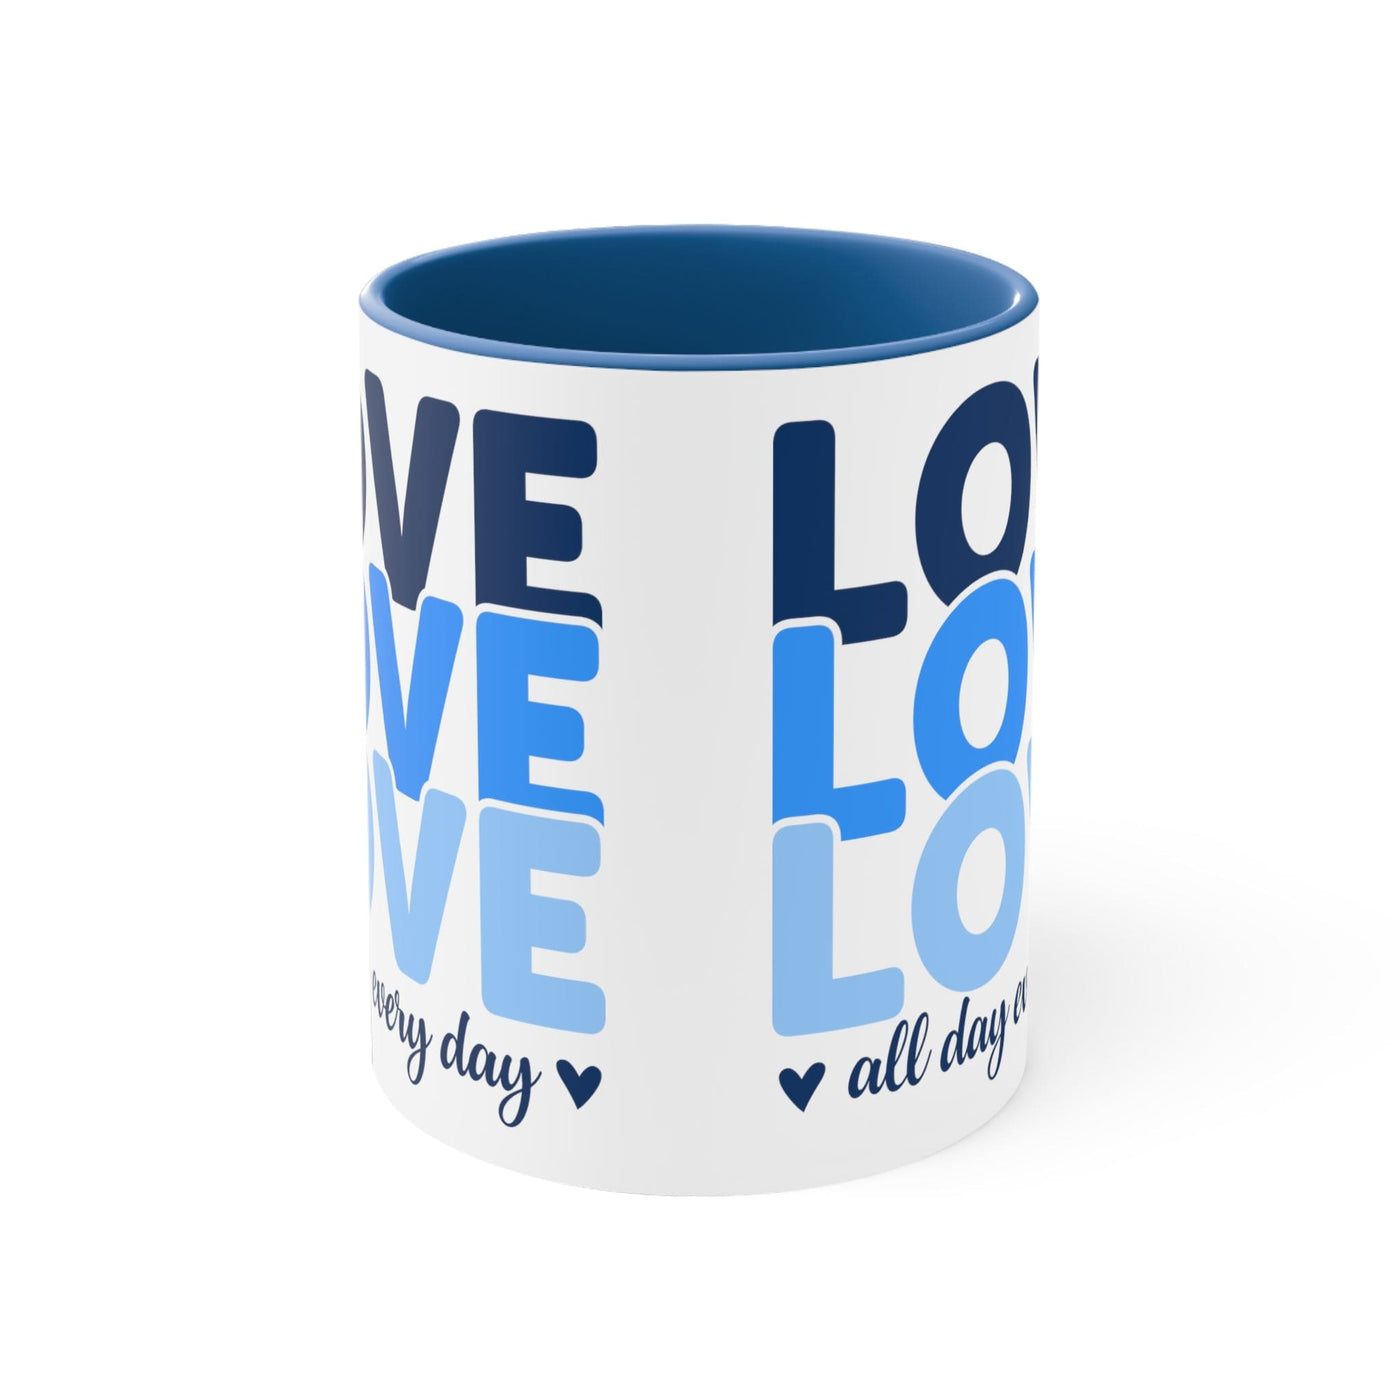 Accent Ceramic Mug 11oz Love All Day Every Blue Print - Decorative | Mugs